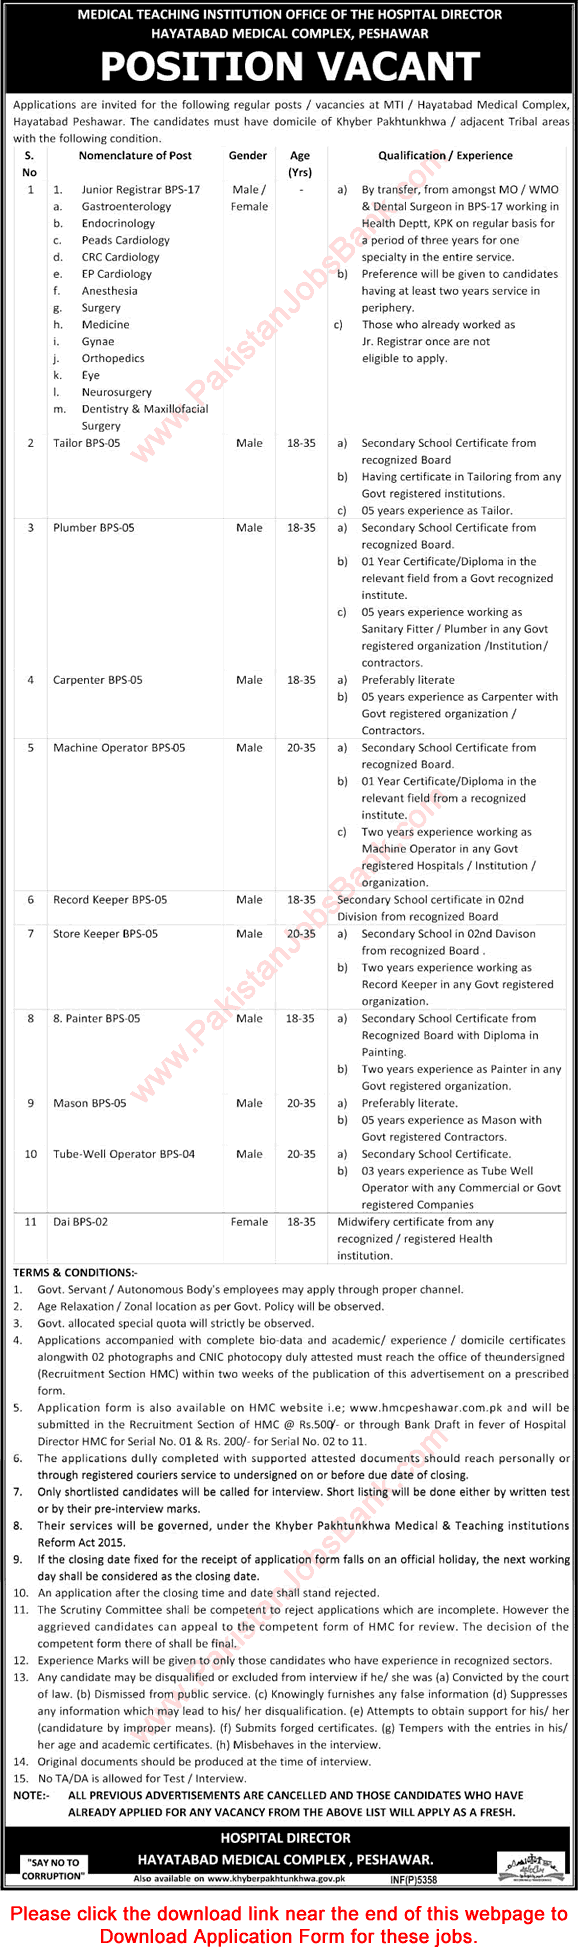 Hayatabad Medical Complex Peshawar Jobs 2015 November MTI Application Form Registrars, Admin & Support Staff